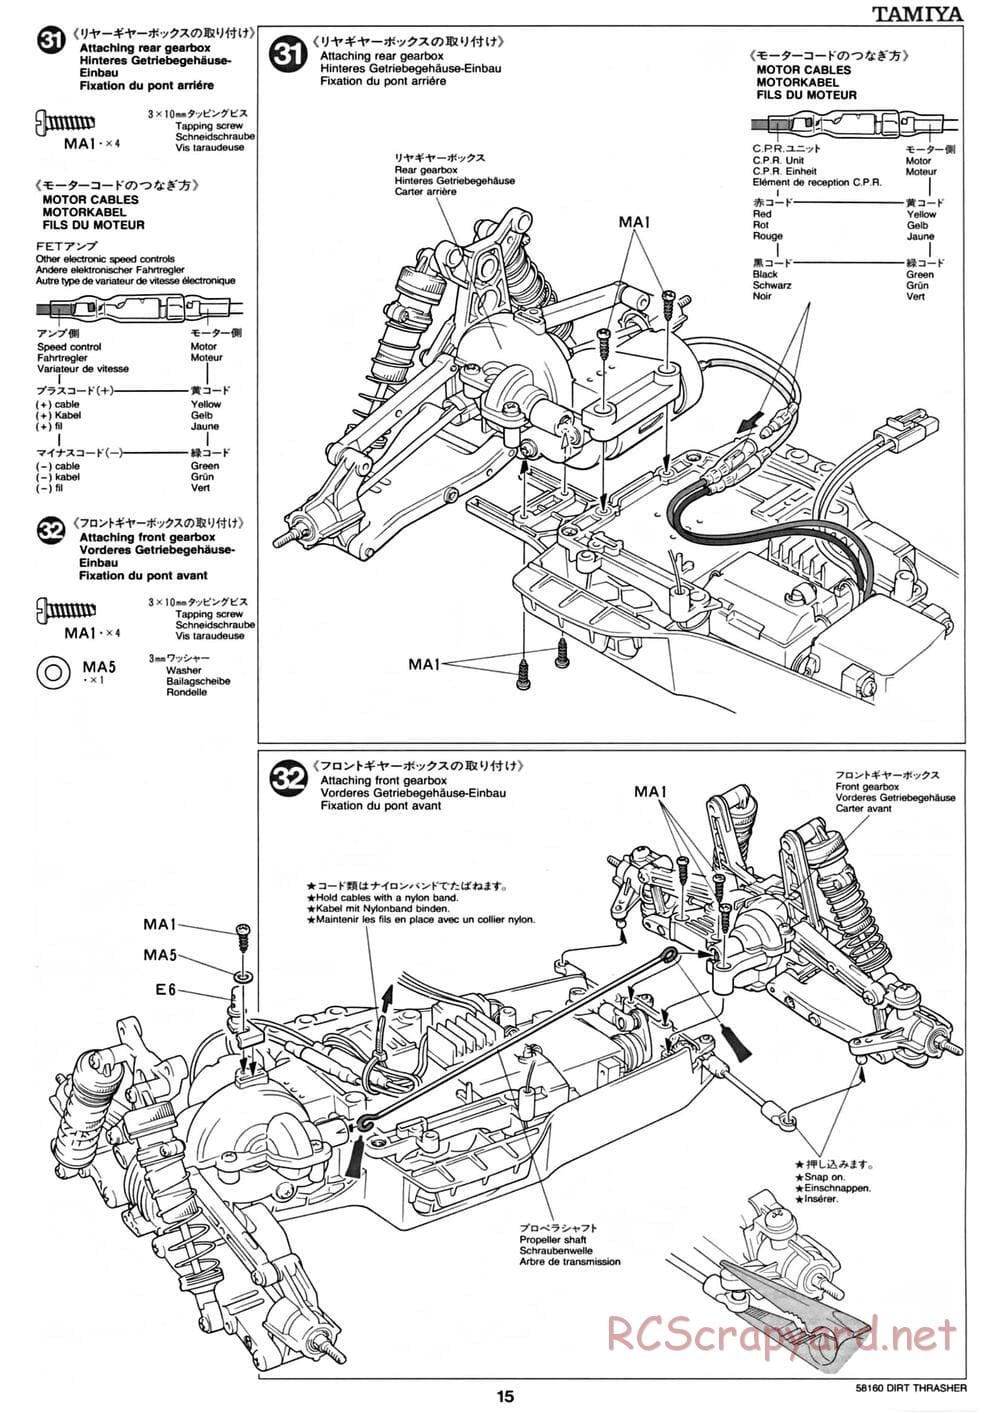 Tamiya - Dirt Thrasher Chassis - Manual - Page 15